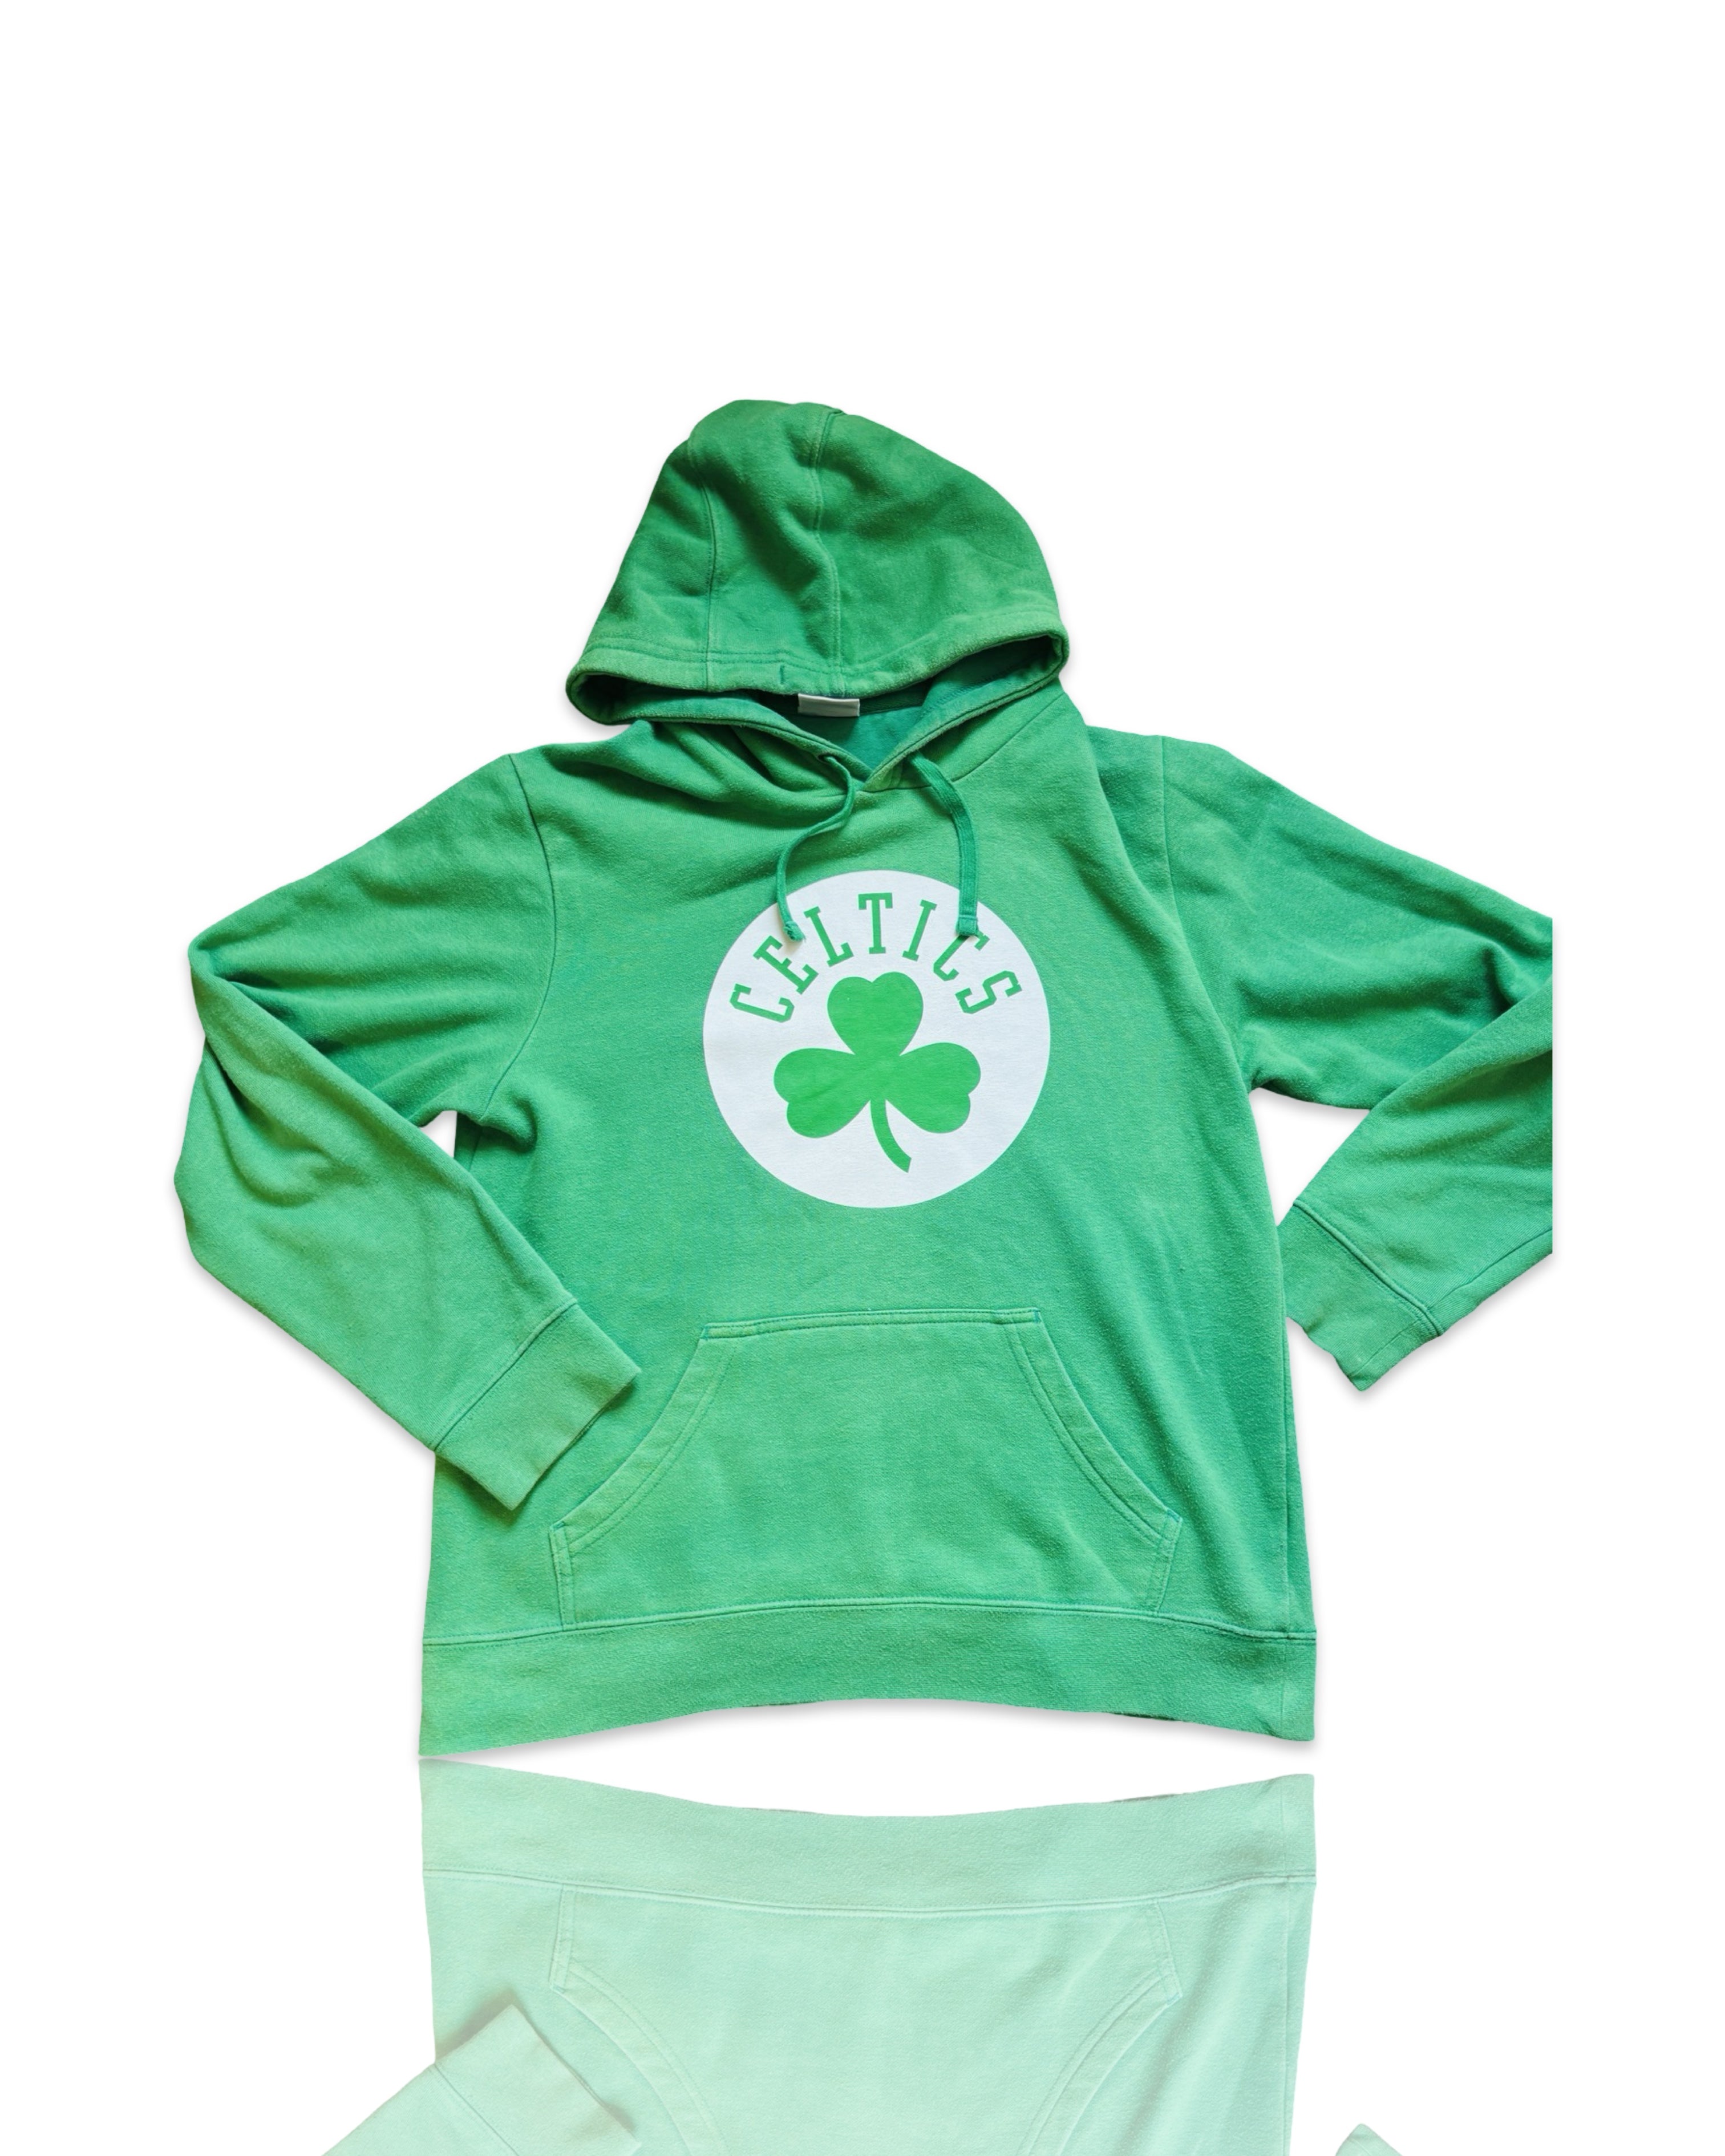 Vintage Boston Celtics Sweater Medium Green Preppy Hoodie - NBA Basketball - Size S 4071